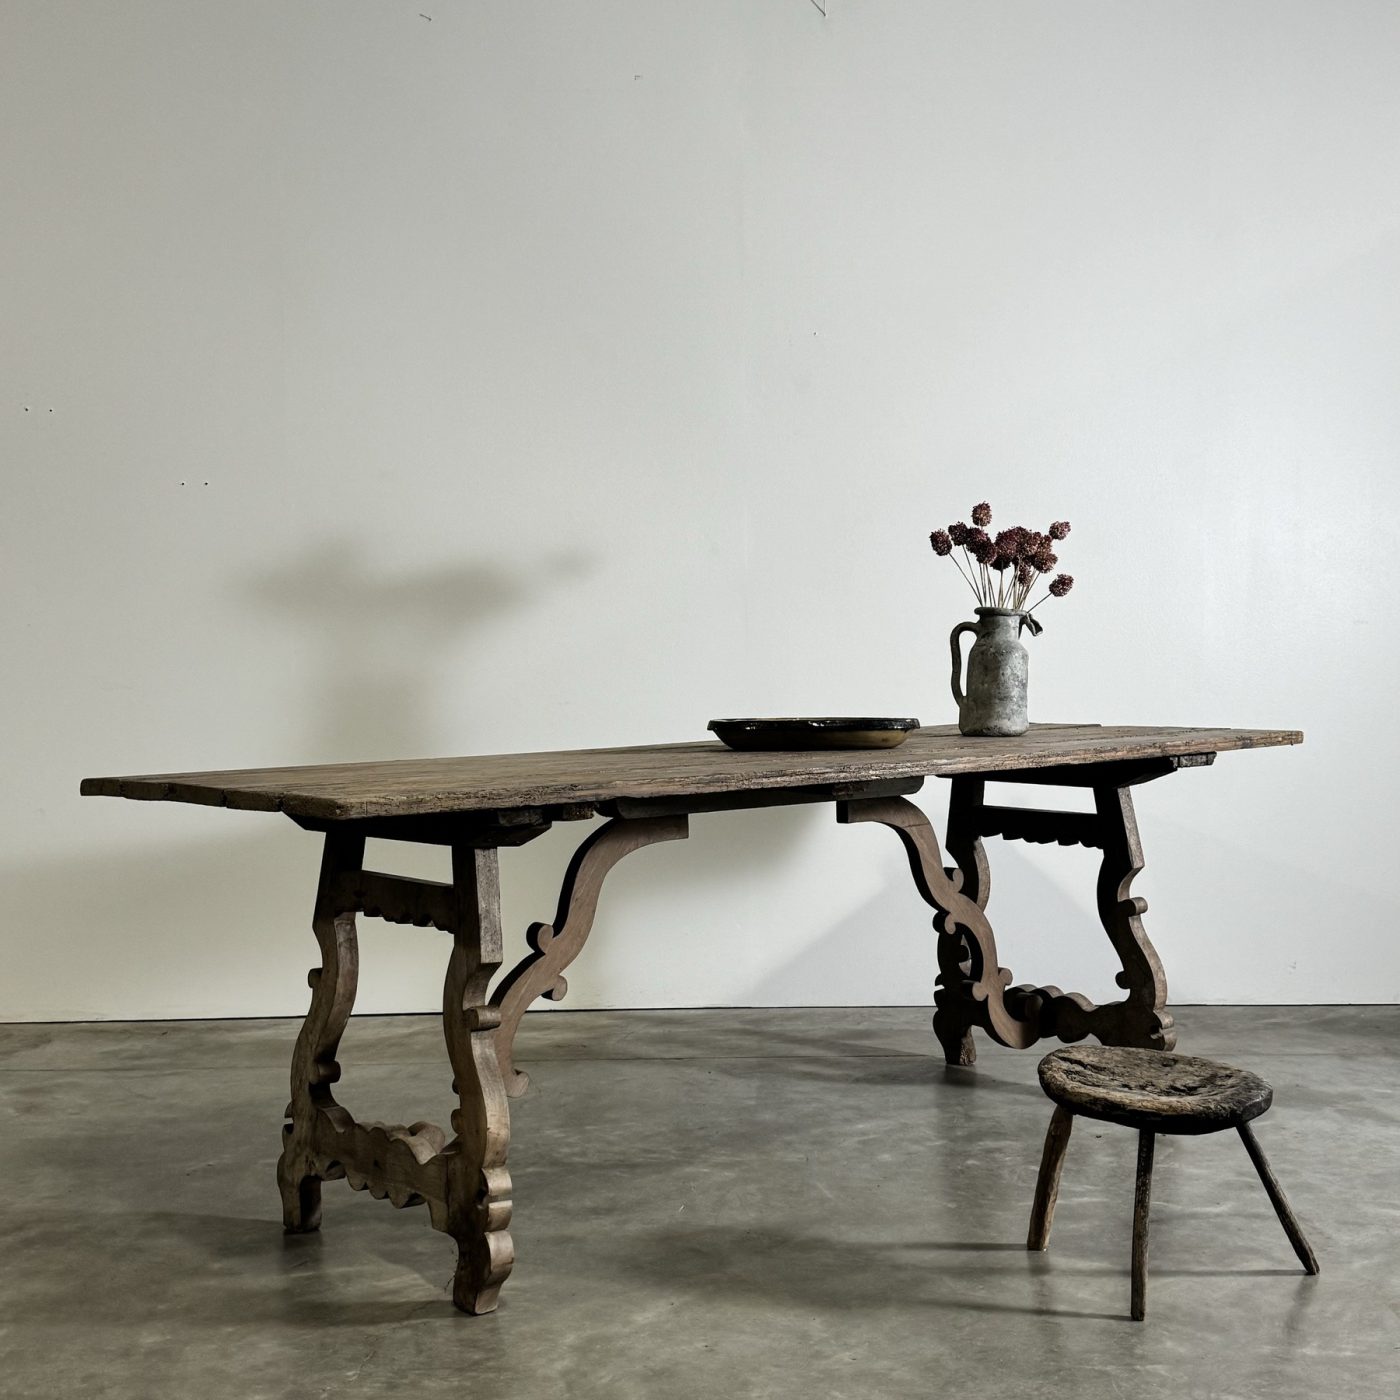 objet-vagabond-spanish-table0001